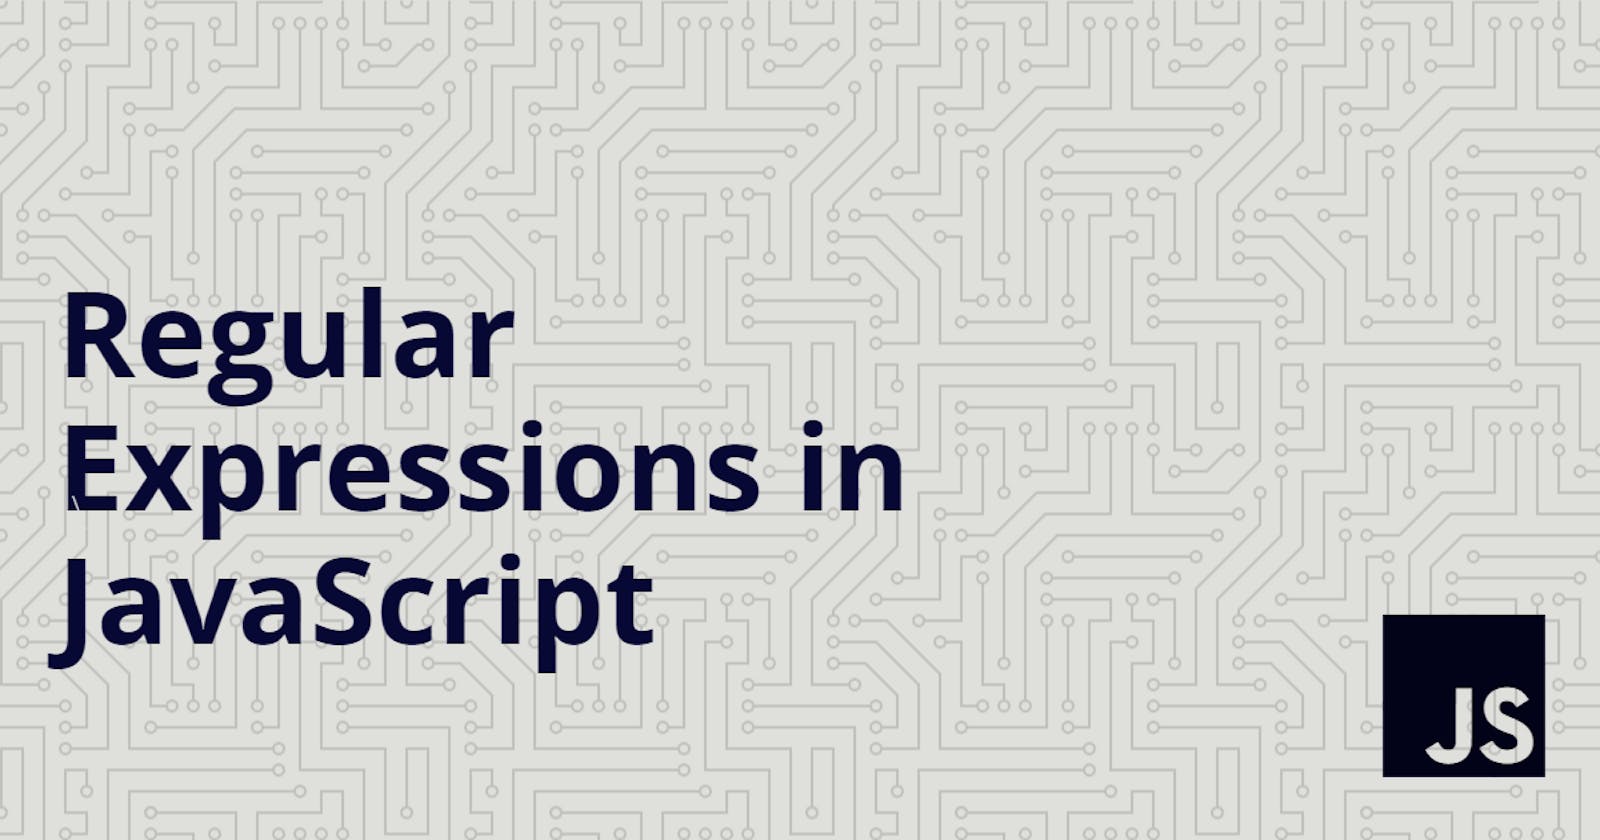 Regular Expressions in JavaScript